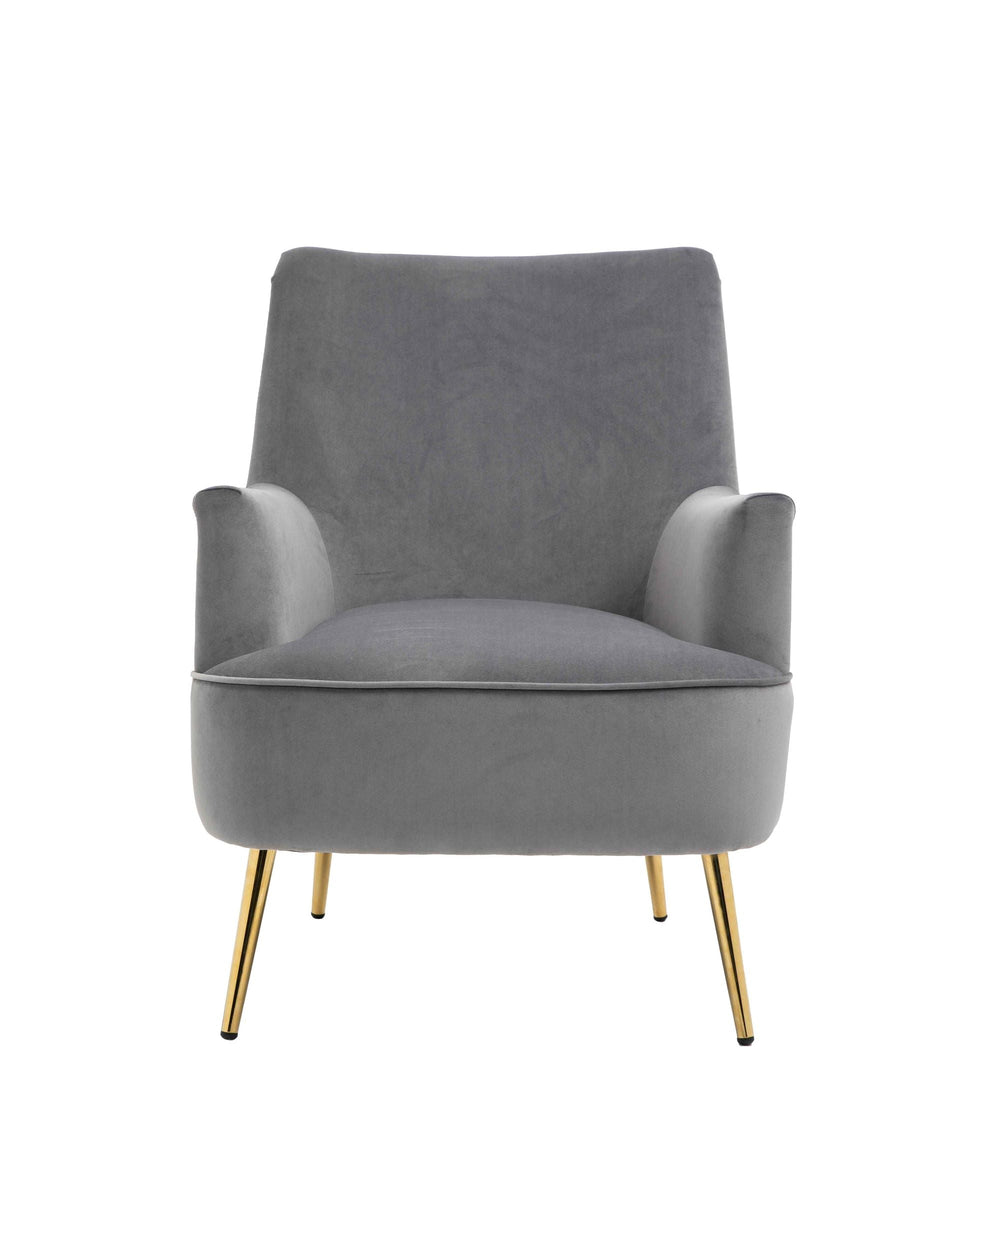 Jetson chair grey